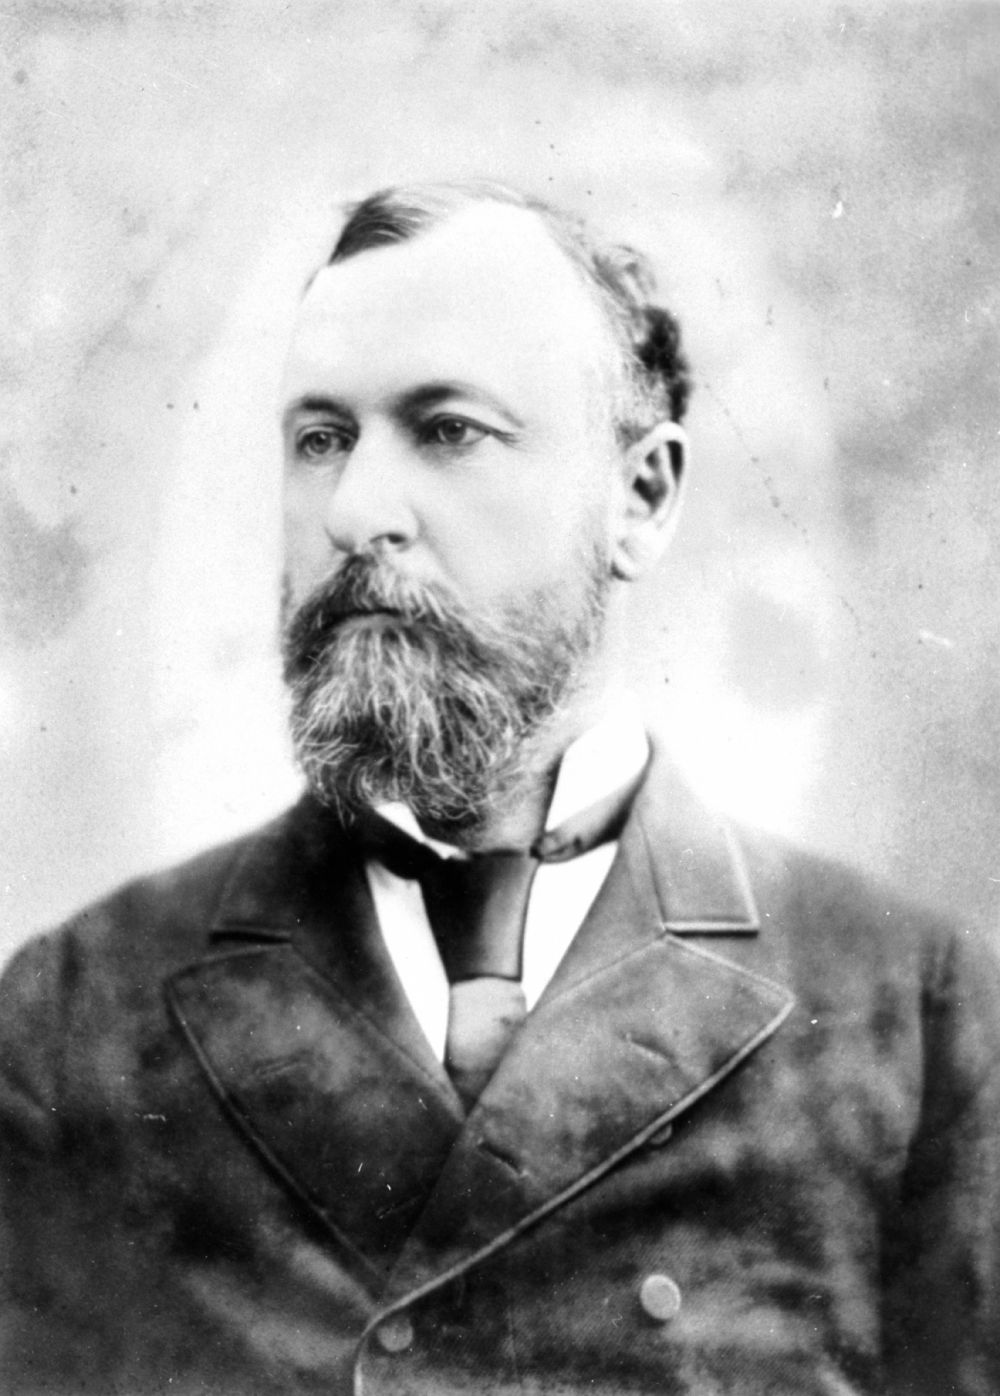 Thomas Macdonald‑Paterson